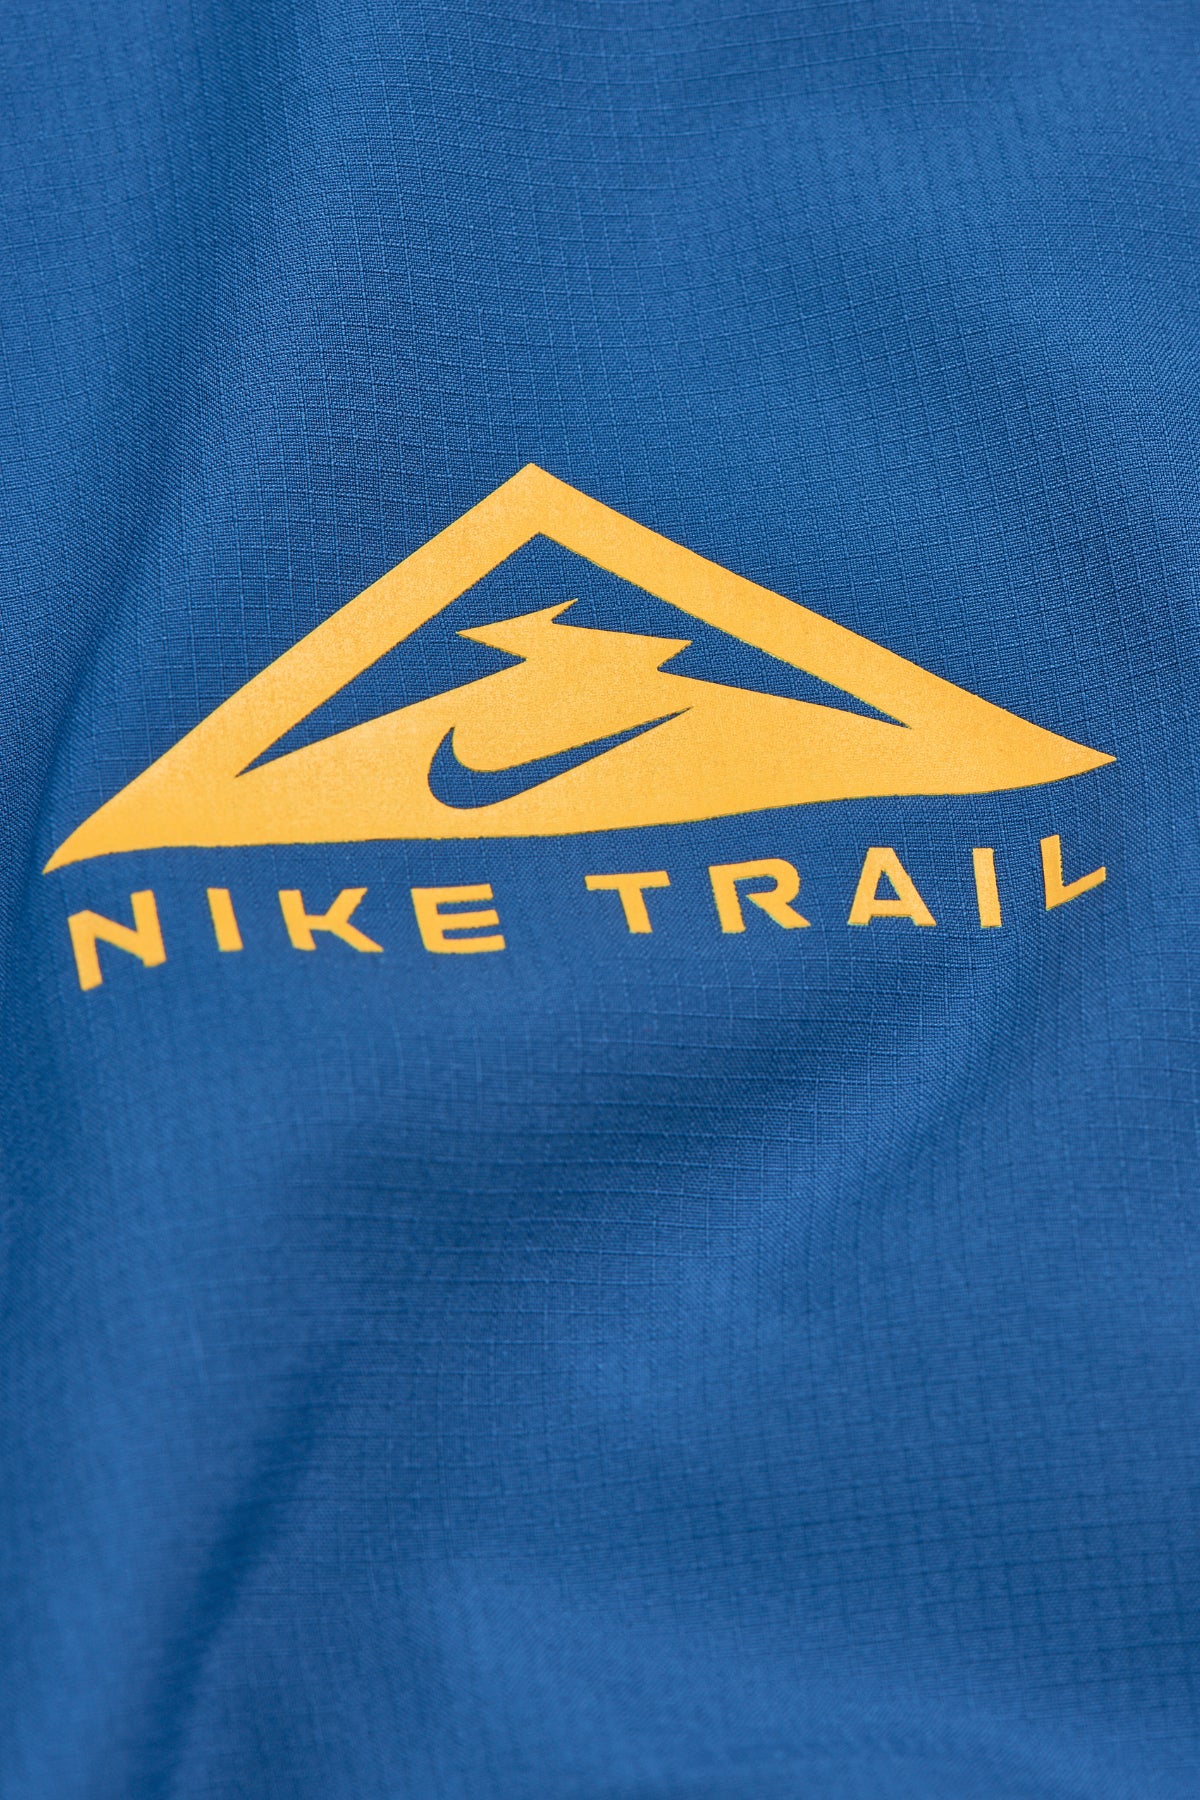 Nike TRAIL - Dri-FIT Rise 365 Tank